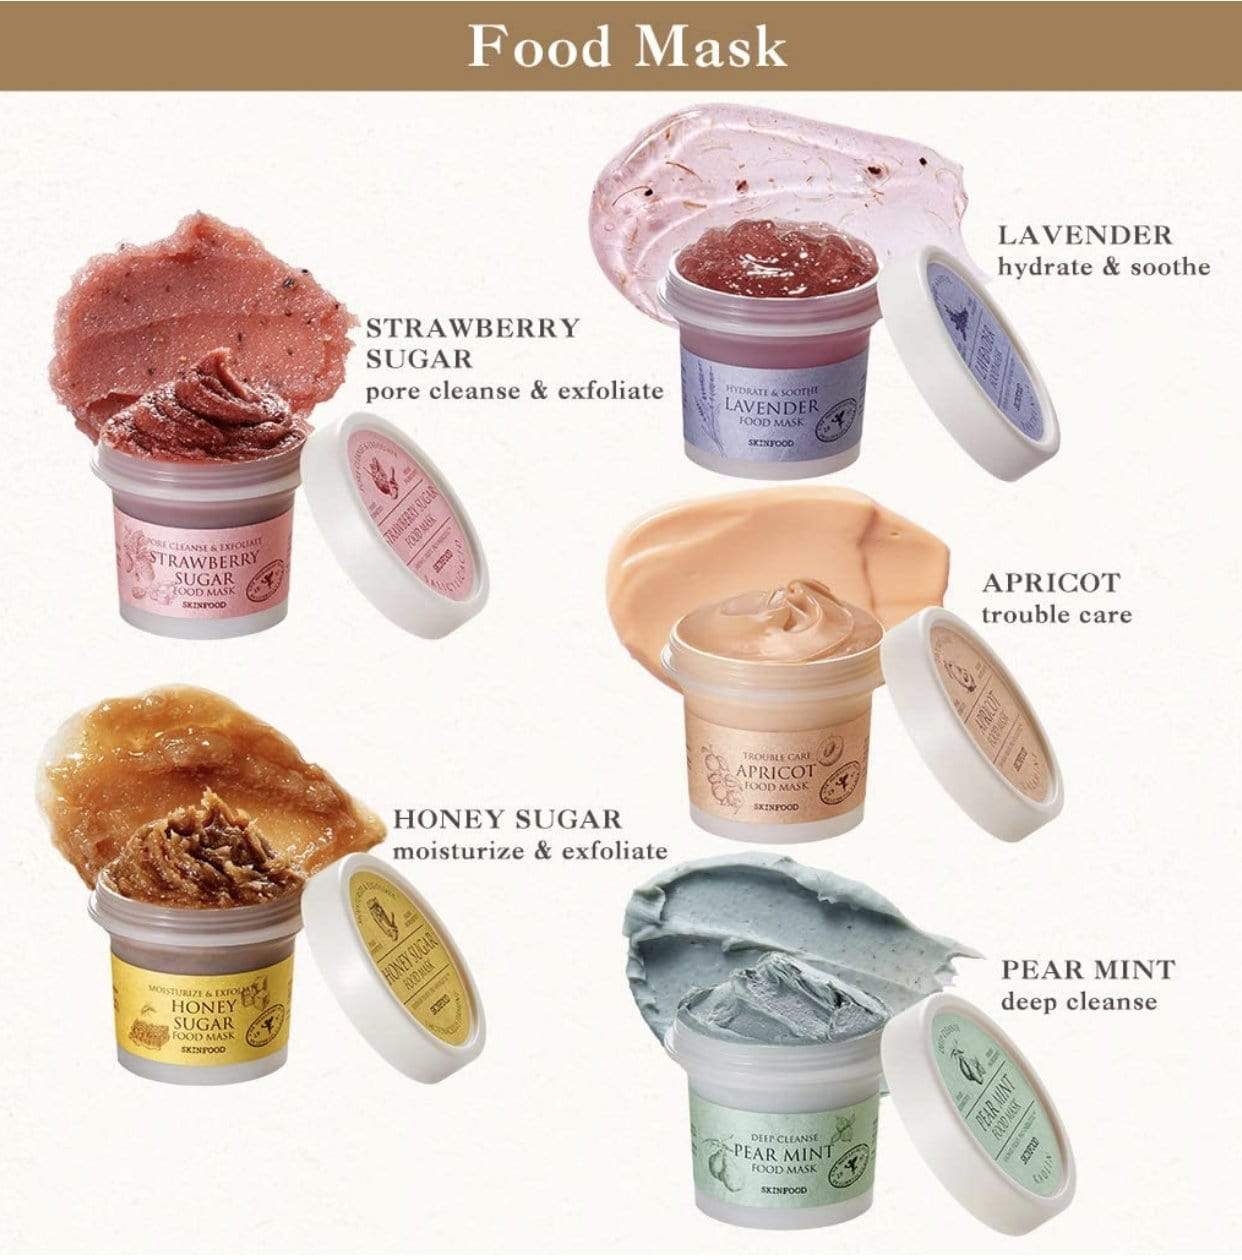 SKINFOOD - Masque visage au sucre noir- plusieurs options possibles- 120g (Collection Anti-Gaspi) - SKINFOOD - Ethni Beauty Market